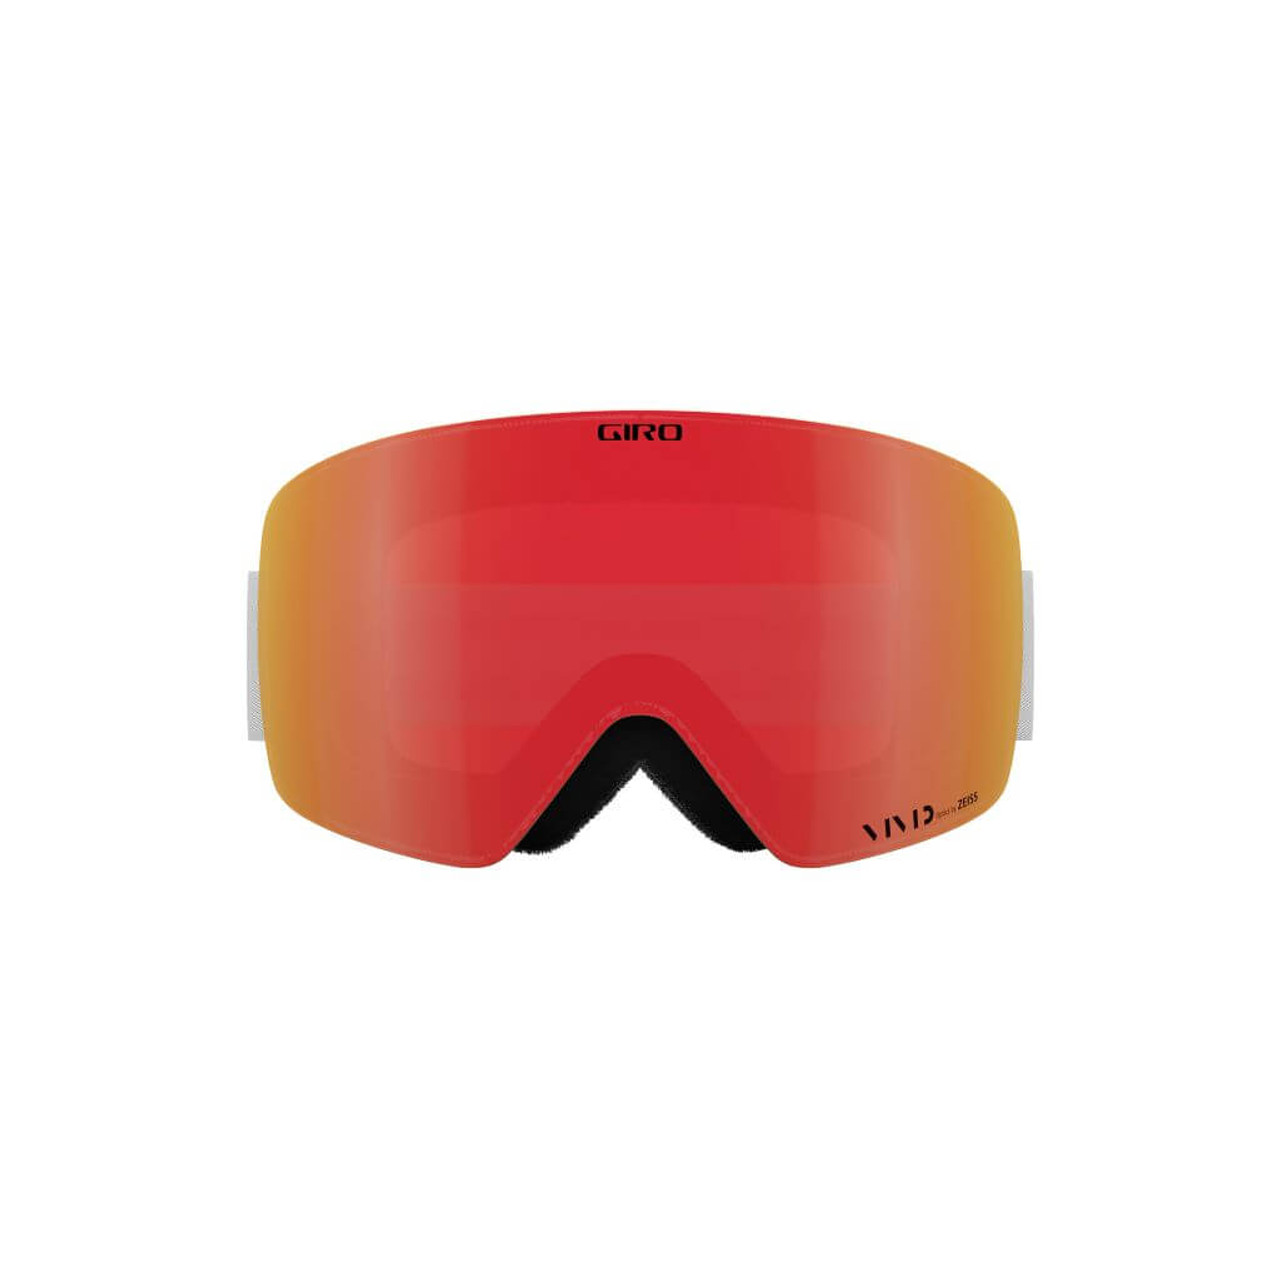 Giro Contour Snow Goggles - PROLENS